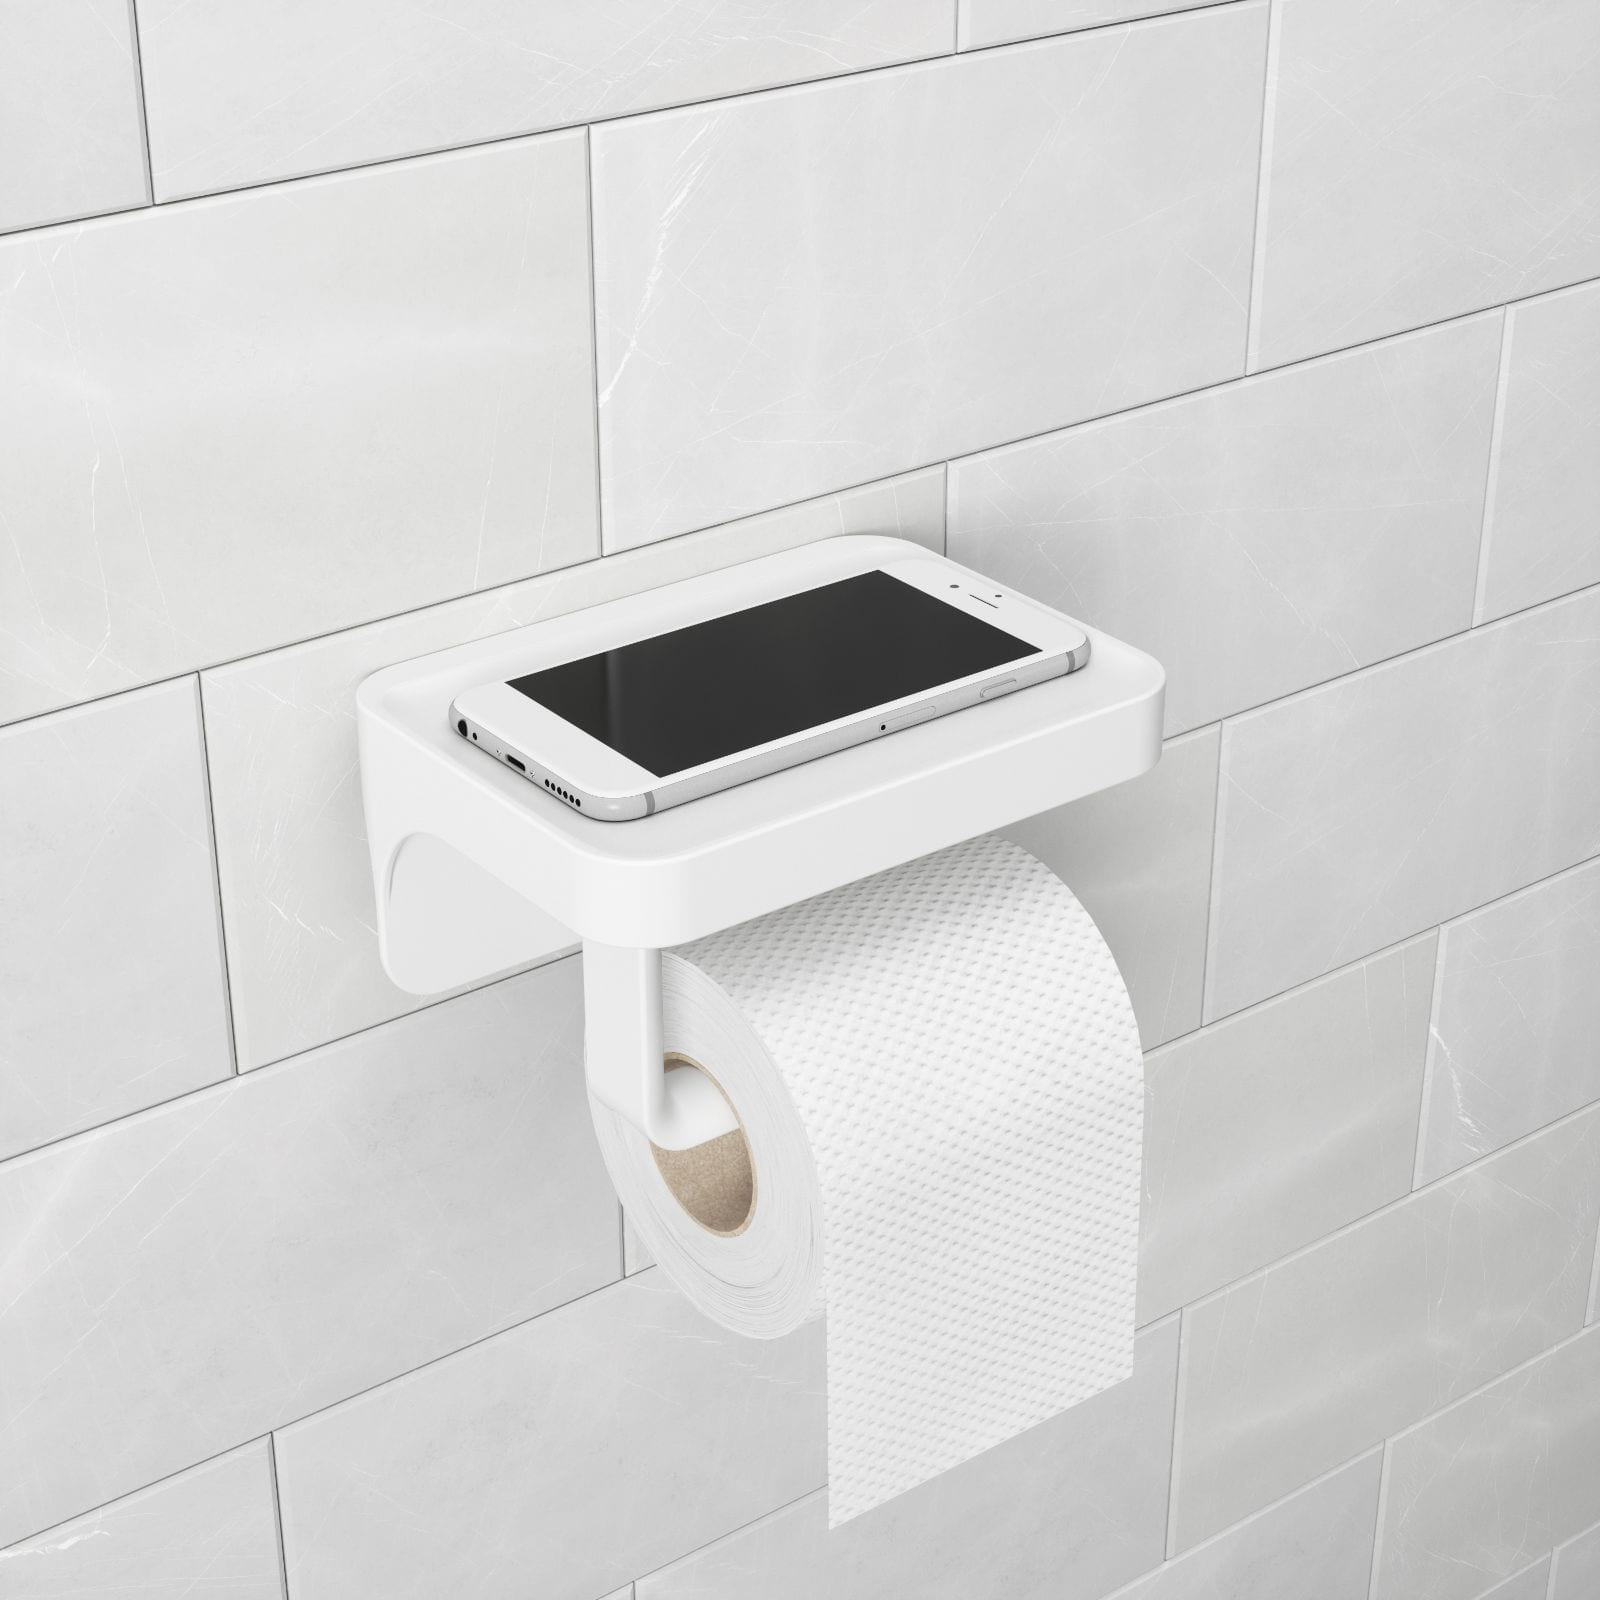 Flex Sure-Lock Toilet Paper Holder & Shelf by Umbra | Design Is This